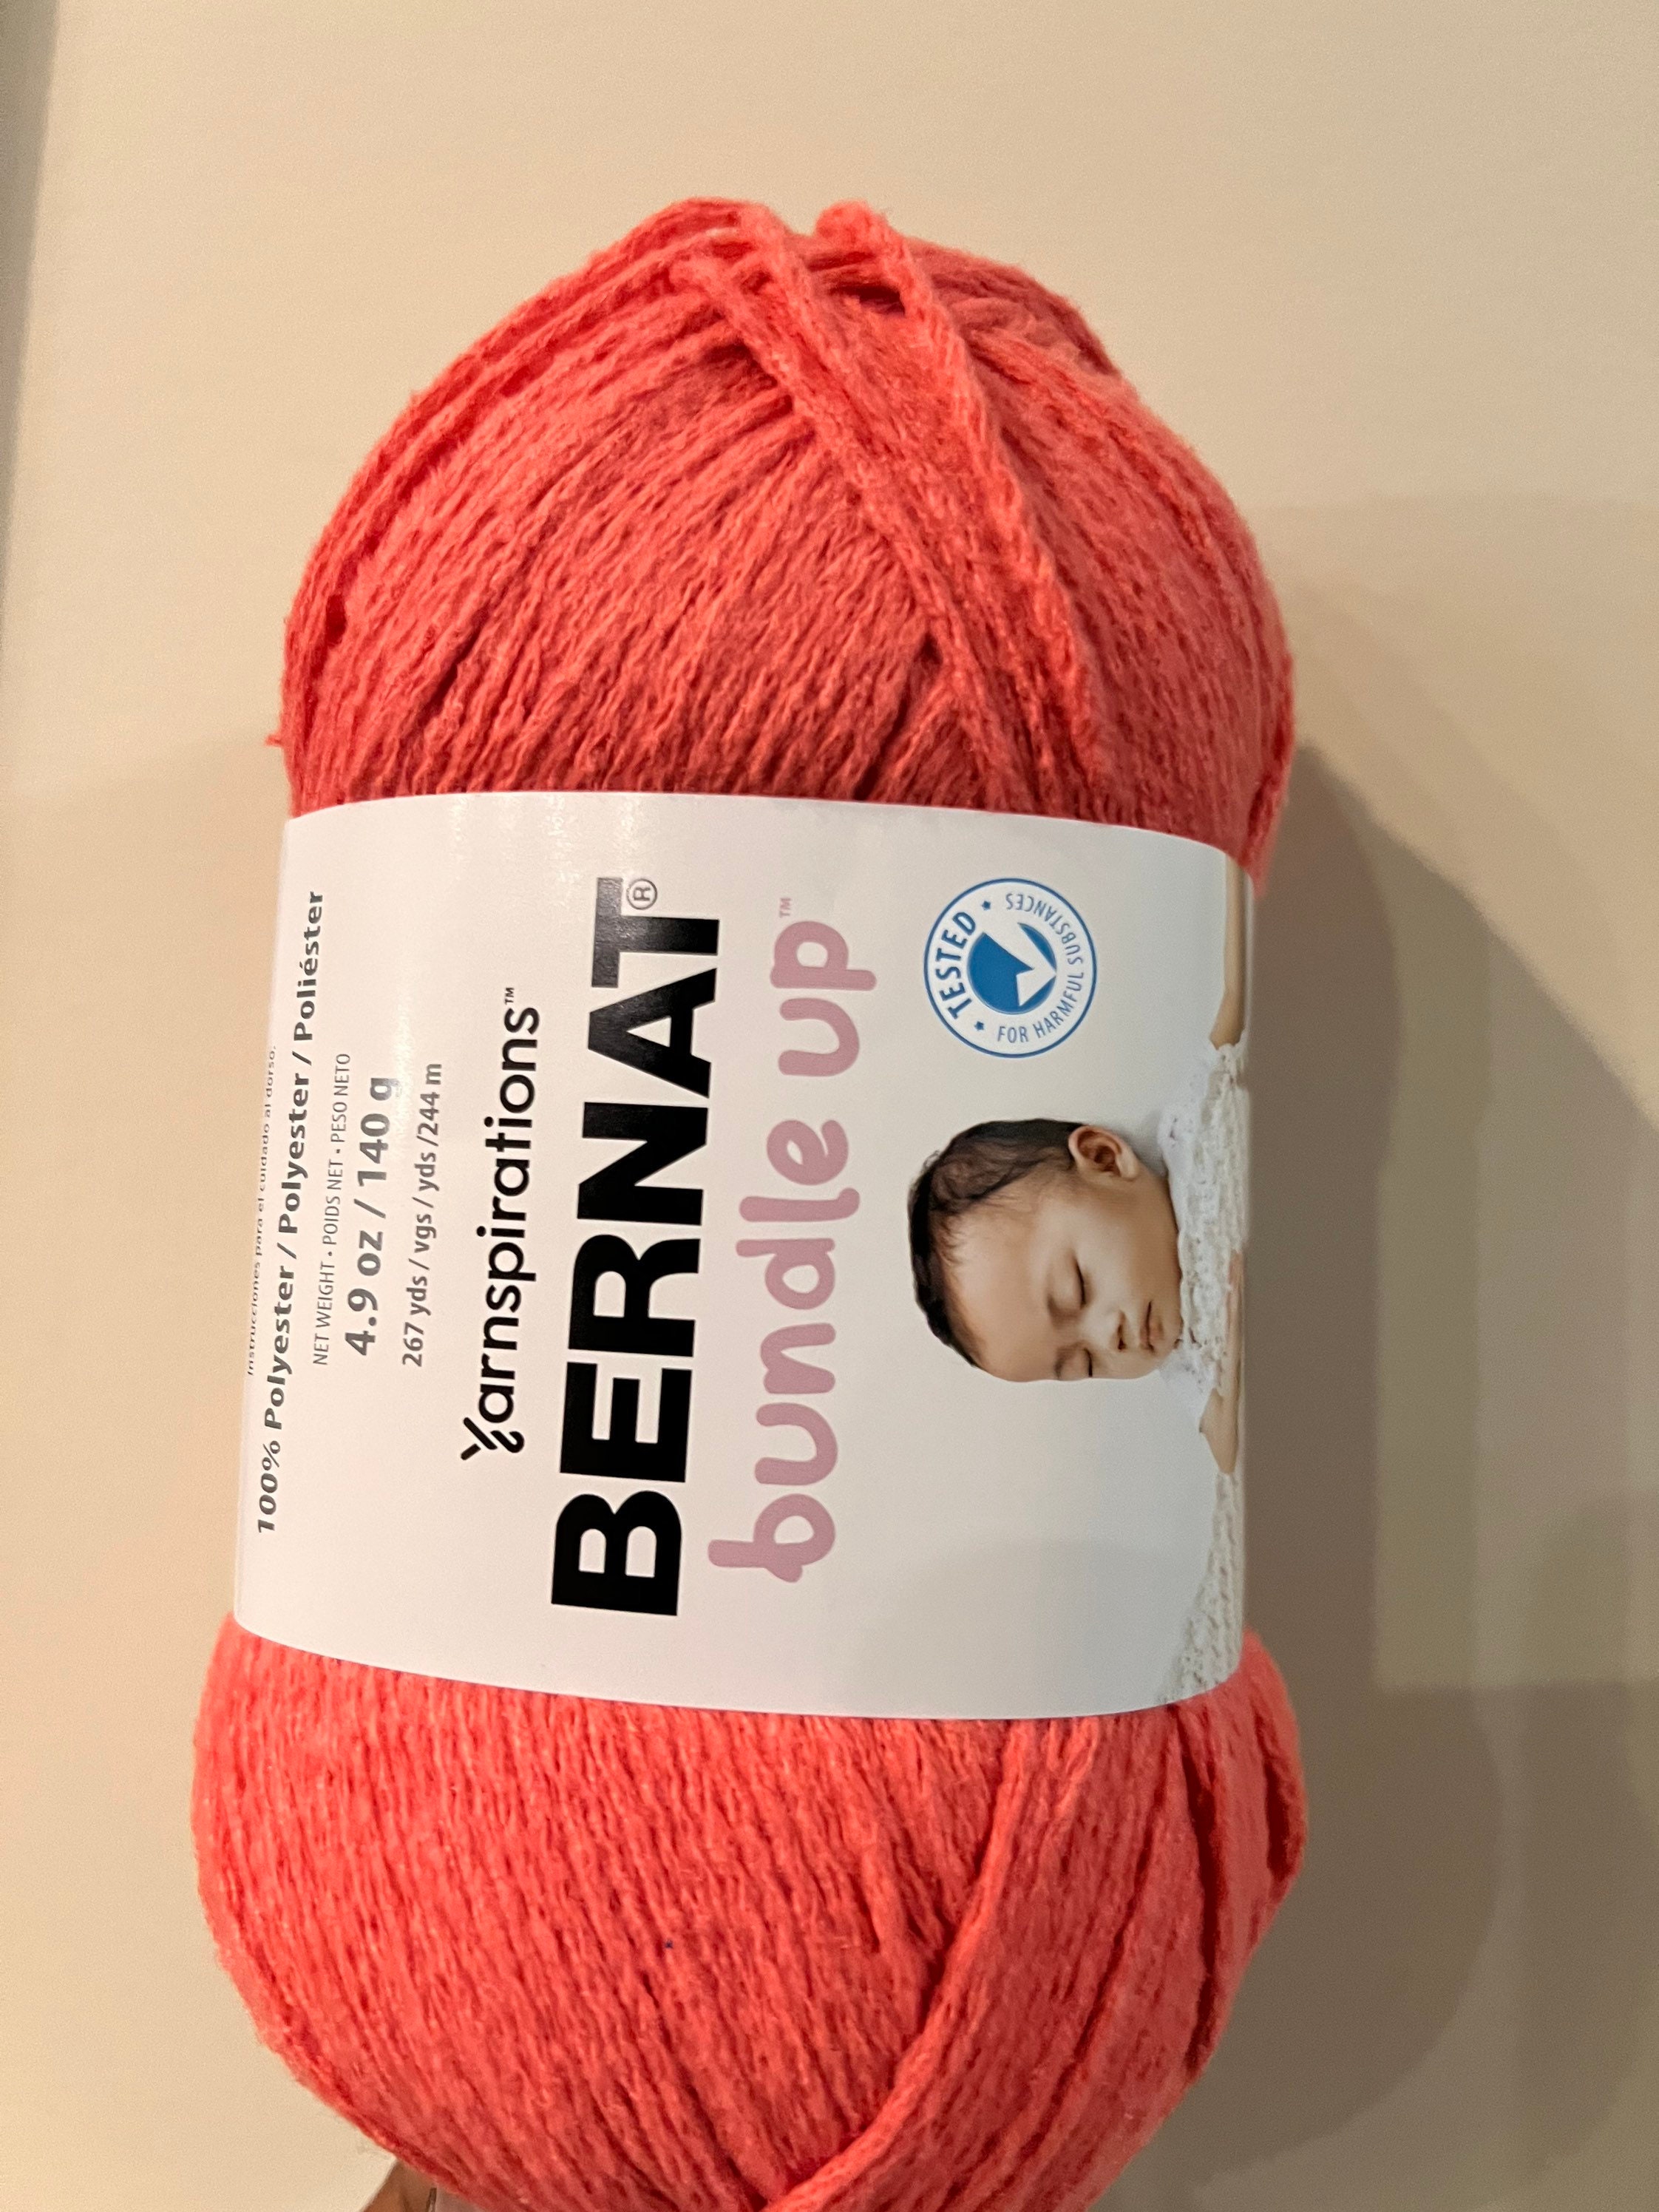 Ya'll!!! Don't sleep on Bernat bundle up Baby Yarn 😍 so soft and